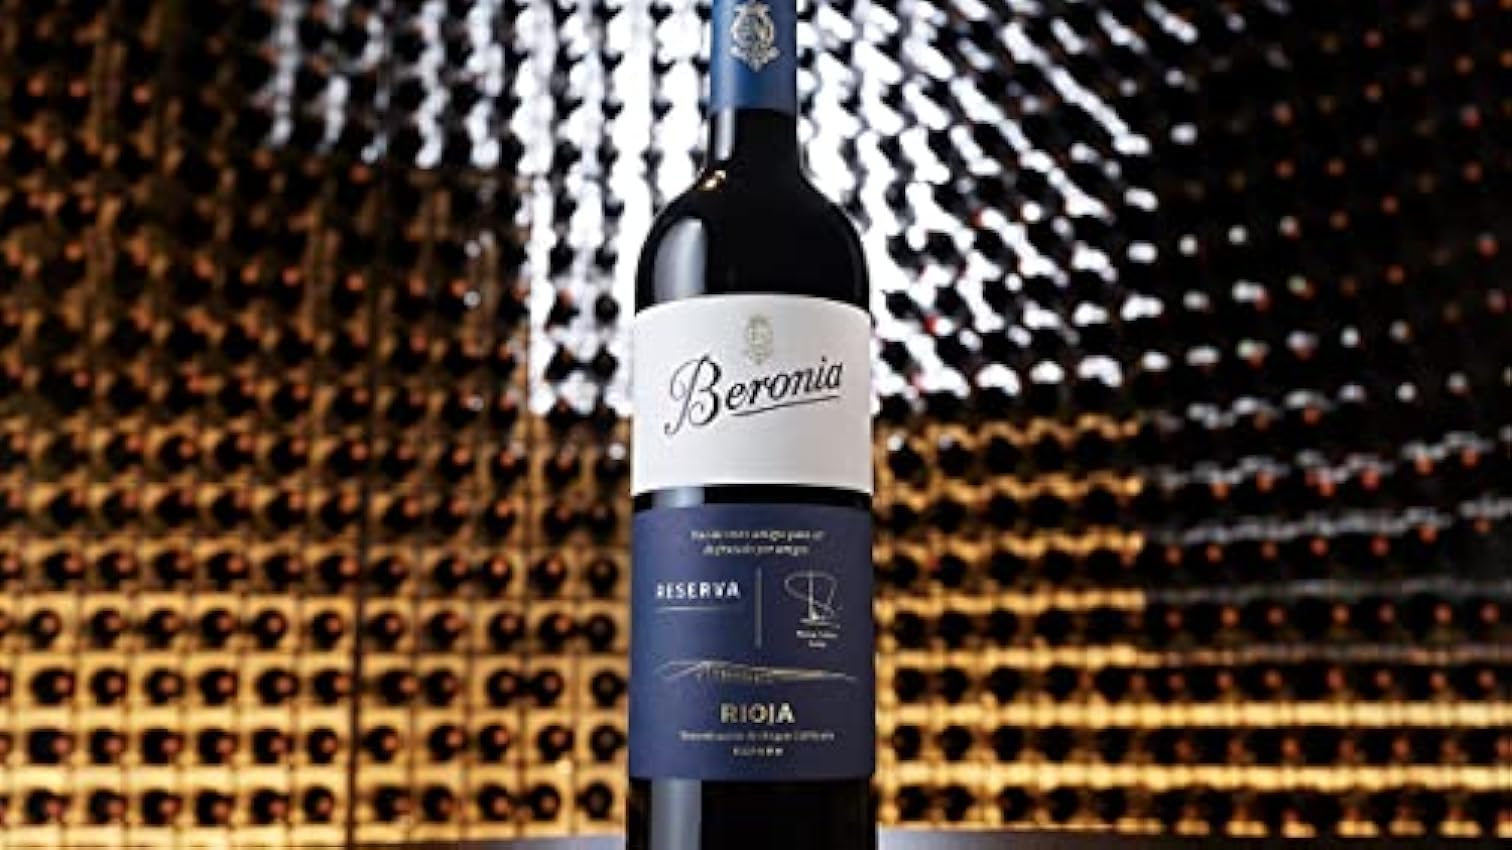 Beronia Reserva - Vino D.O.Ca. Rioja - Caja de Madera - 6 botellas de 750 ml - Total: 4500 ml pO0XFmMI